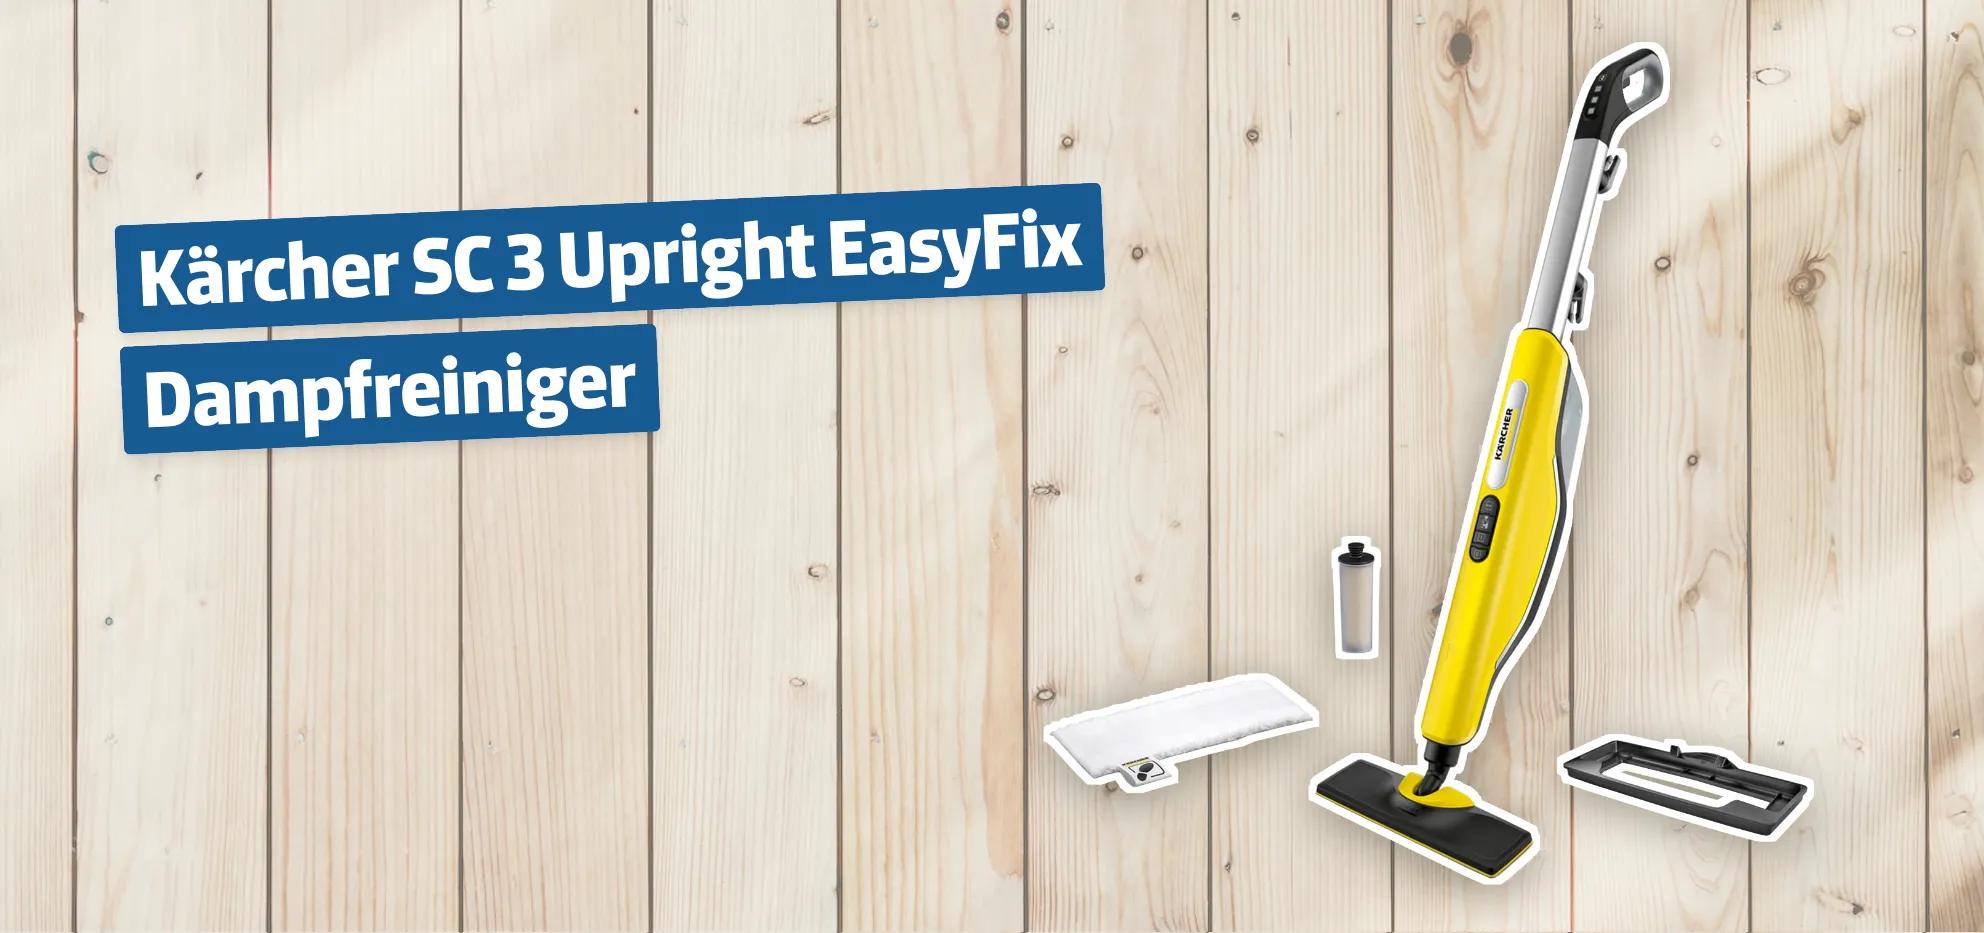 Kärcher SC 3 Upright EasyFix Dampfreiniger